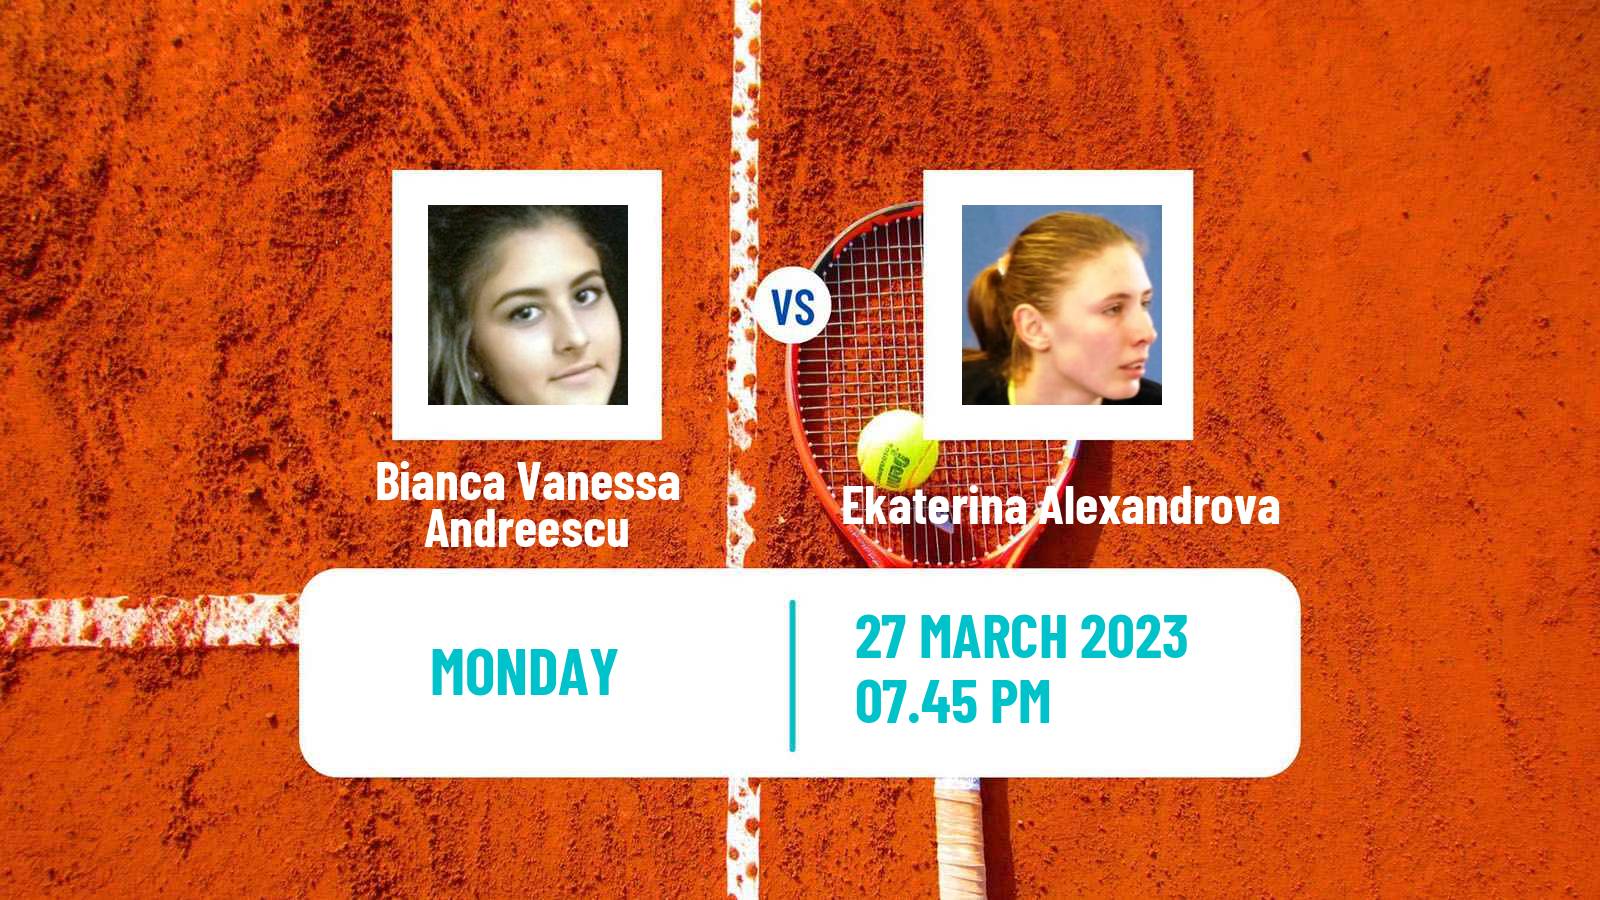 Tennis WTA Miami Bianca Vanessa Andreescu - Ekaterina Alexandrova